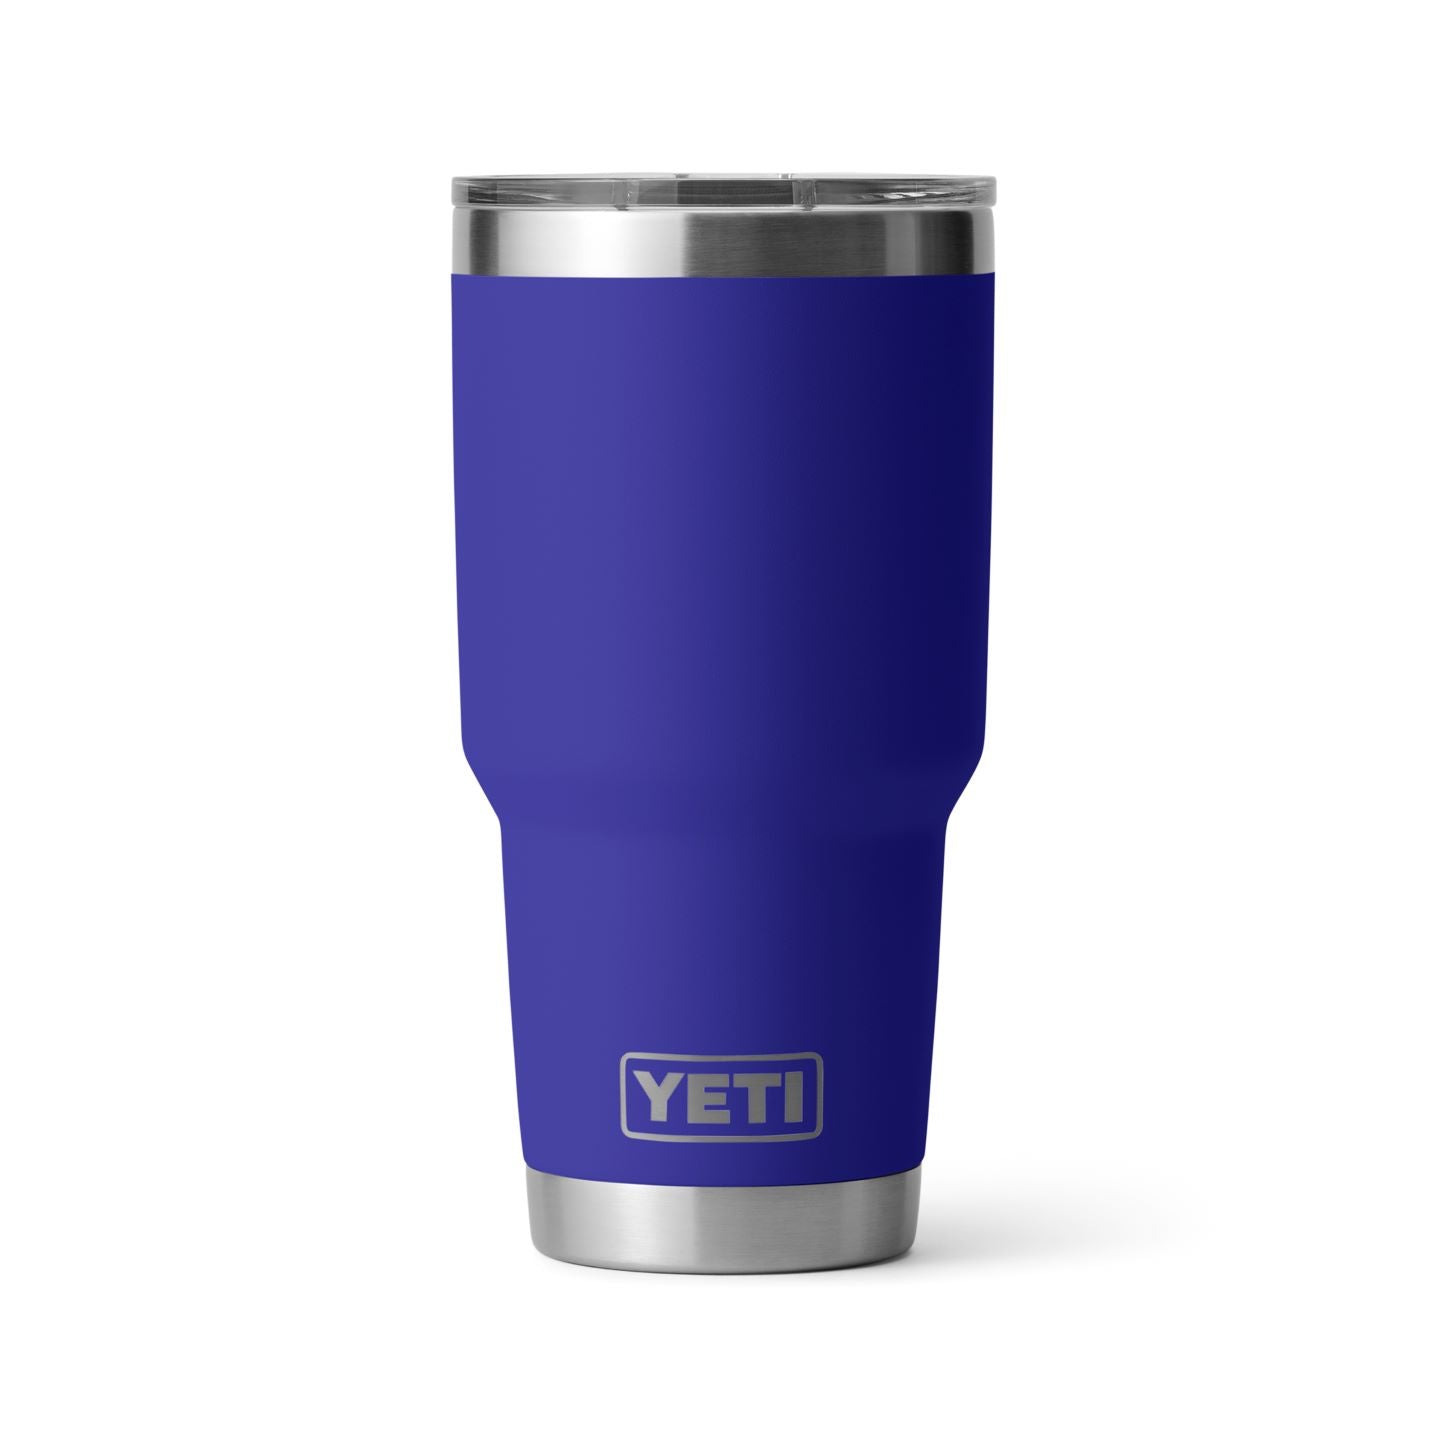 YETI / Rambler 24 oz Mug - Offshore Blue